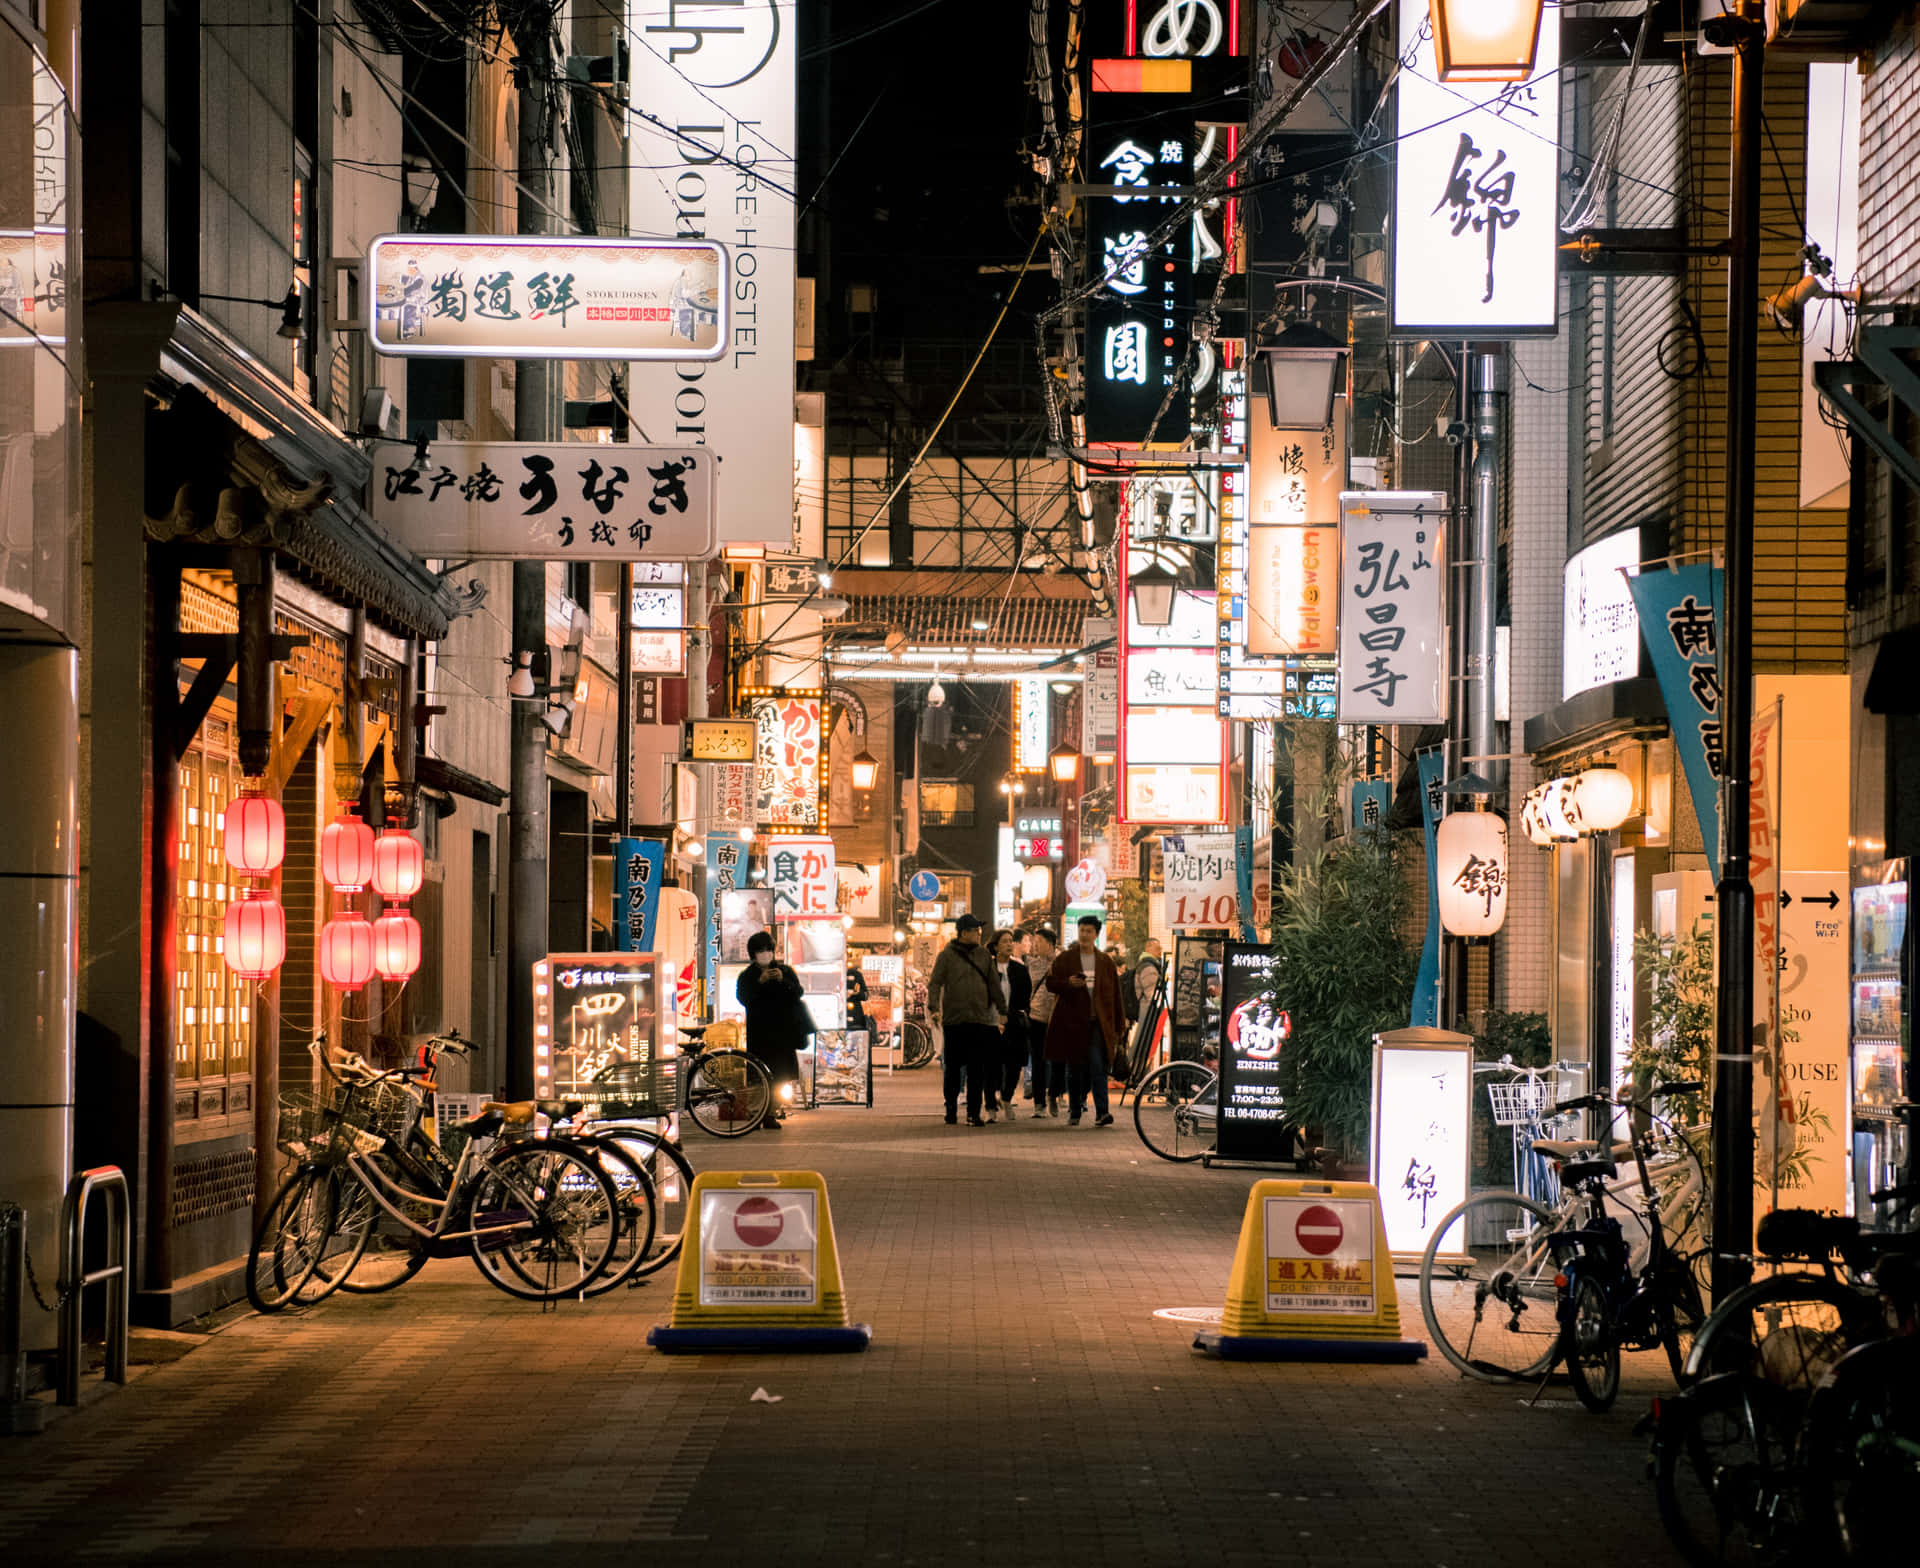 A City Street At Night